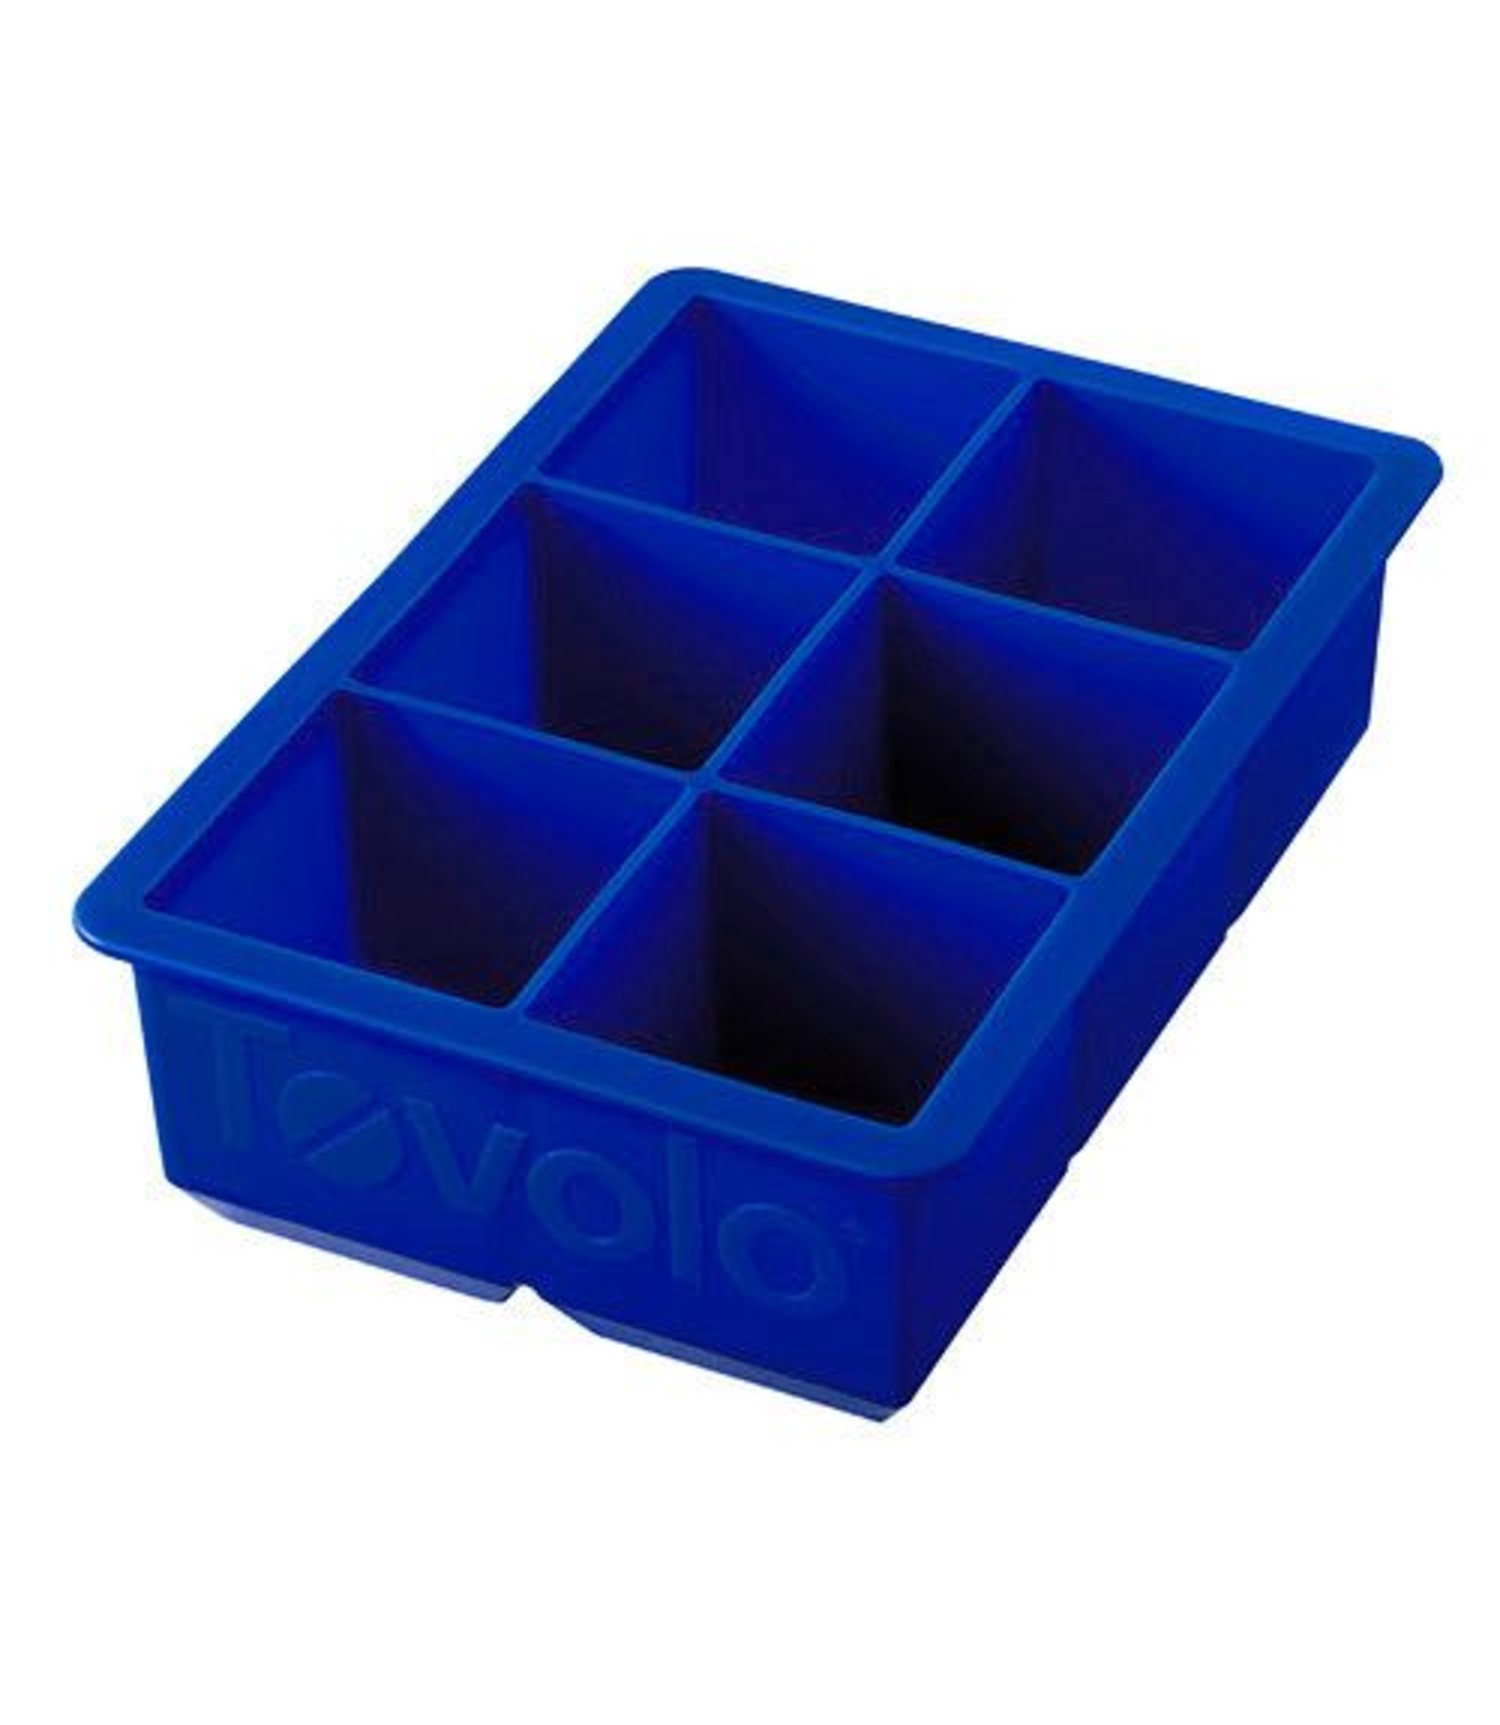 https://cdn.shoplightspeed.com/shops/606142/files/9331216/1500x4000x3/tovolo-king-cube-2x2-ice-cube-tray.jpg